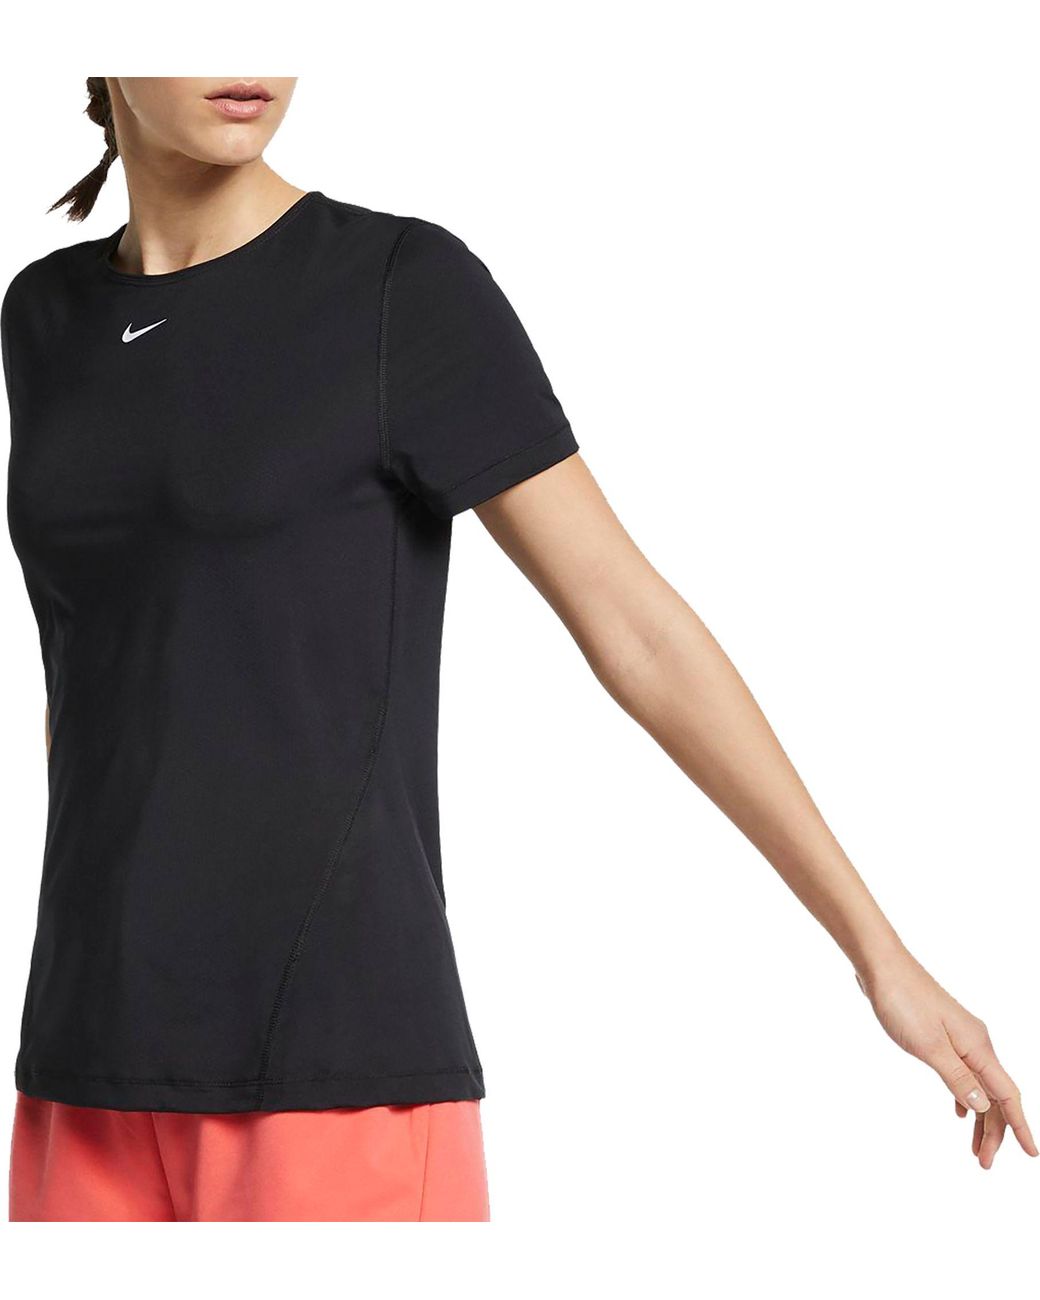 Nike Pro Mesh Training T-shirt in Black - Lyst